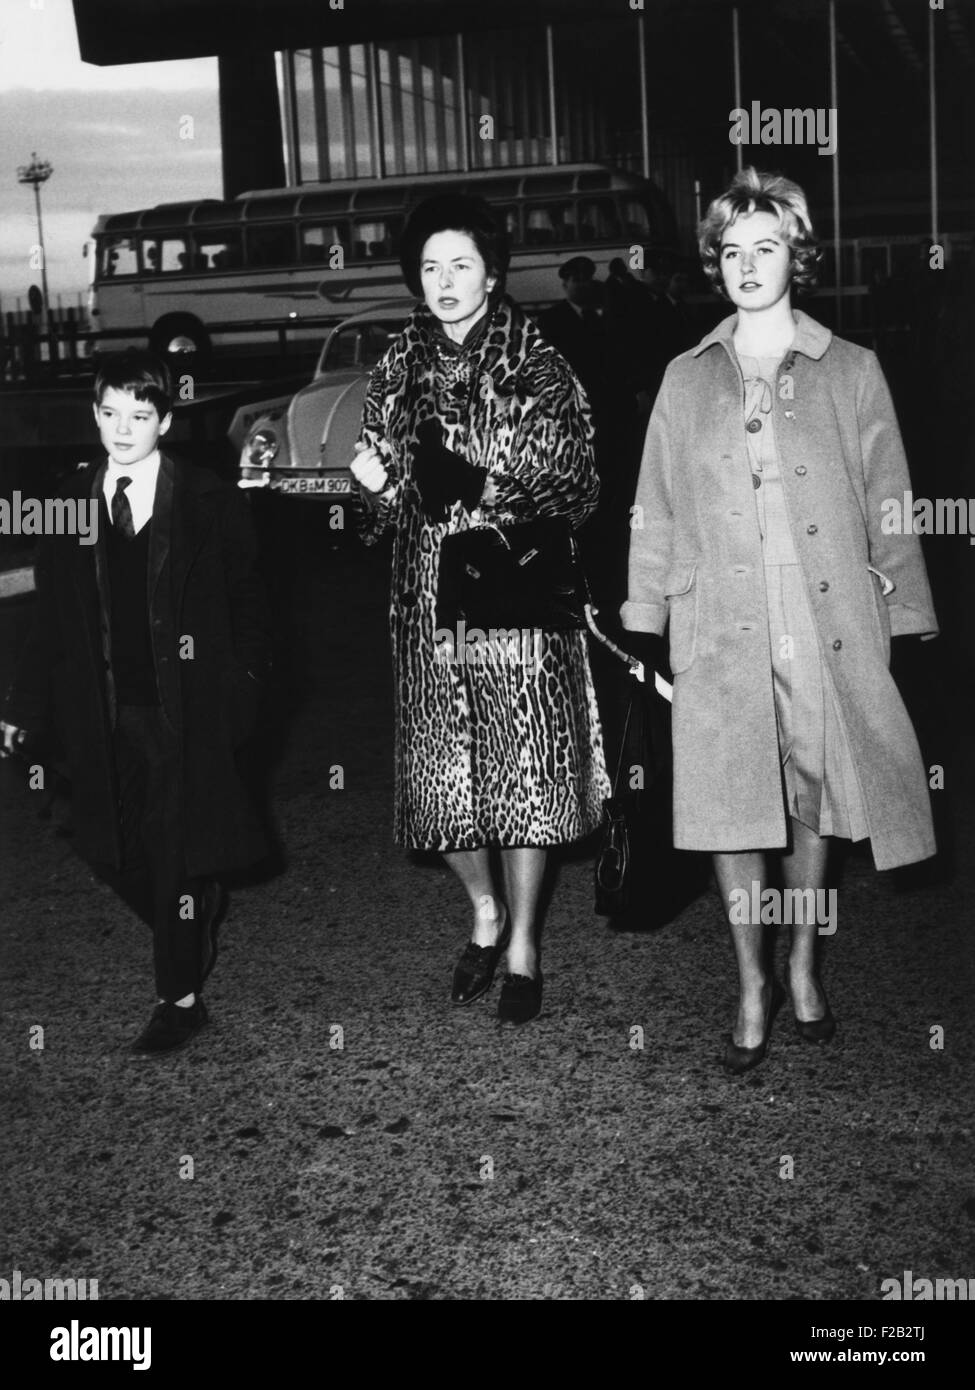 Ingrid Bergman with her children, Pia Lindstrom and Robertino Rossellini, at Rome airport. Jan. 5, 1962 (CSU 2015 7 334) Stock Photo